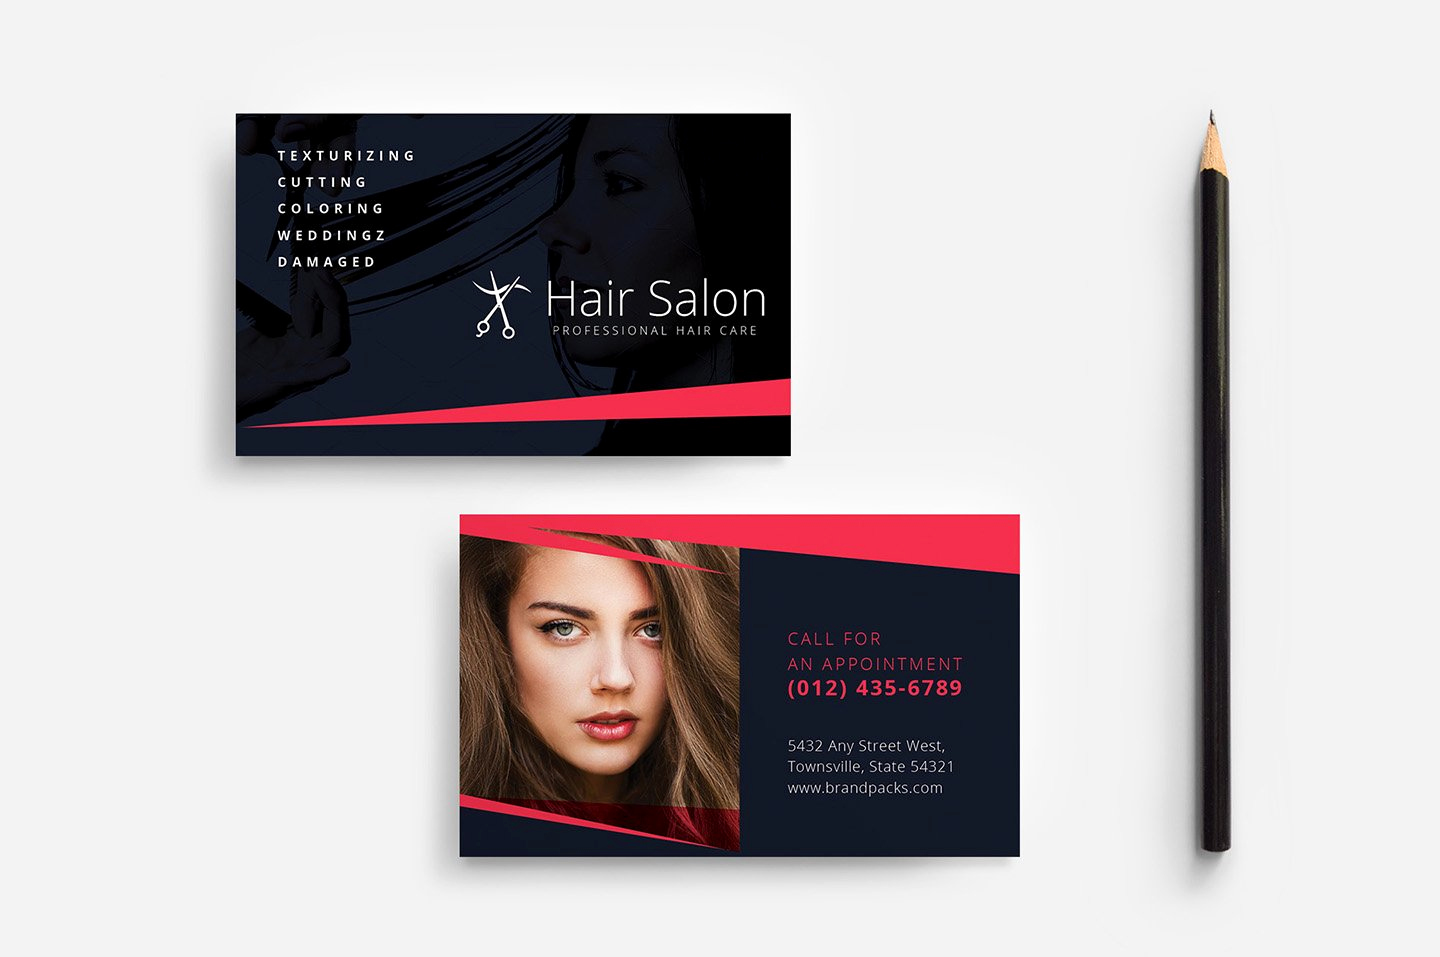 Hair Salon Buisness Cards Unique Hair Salon Business Card Template Business Card